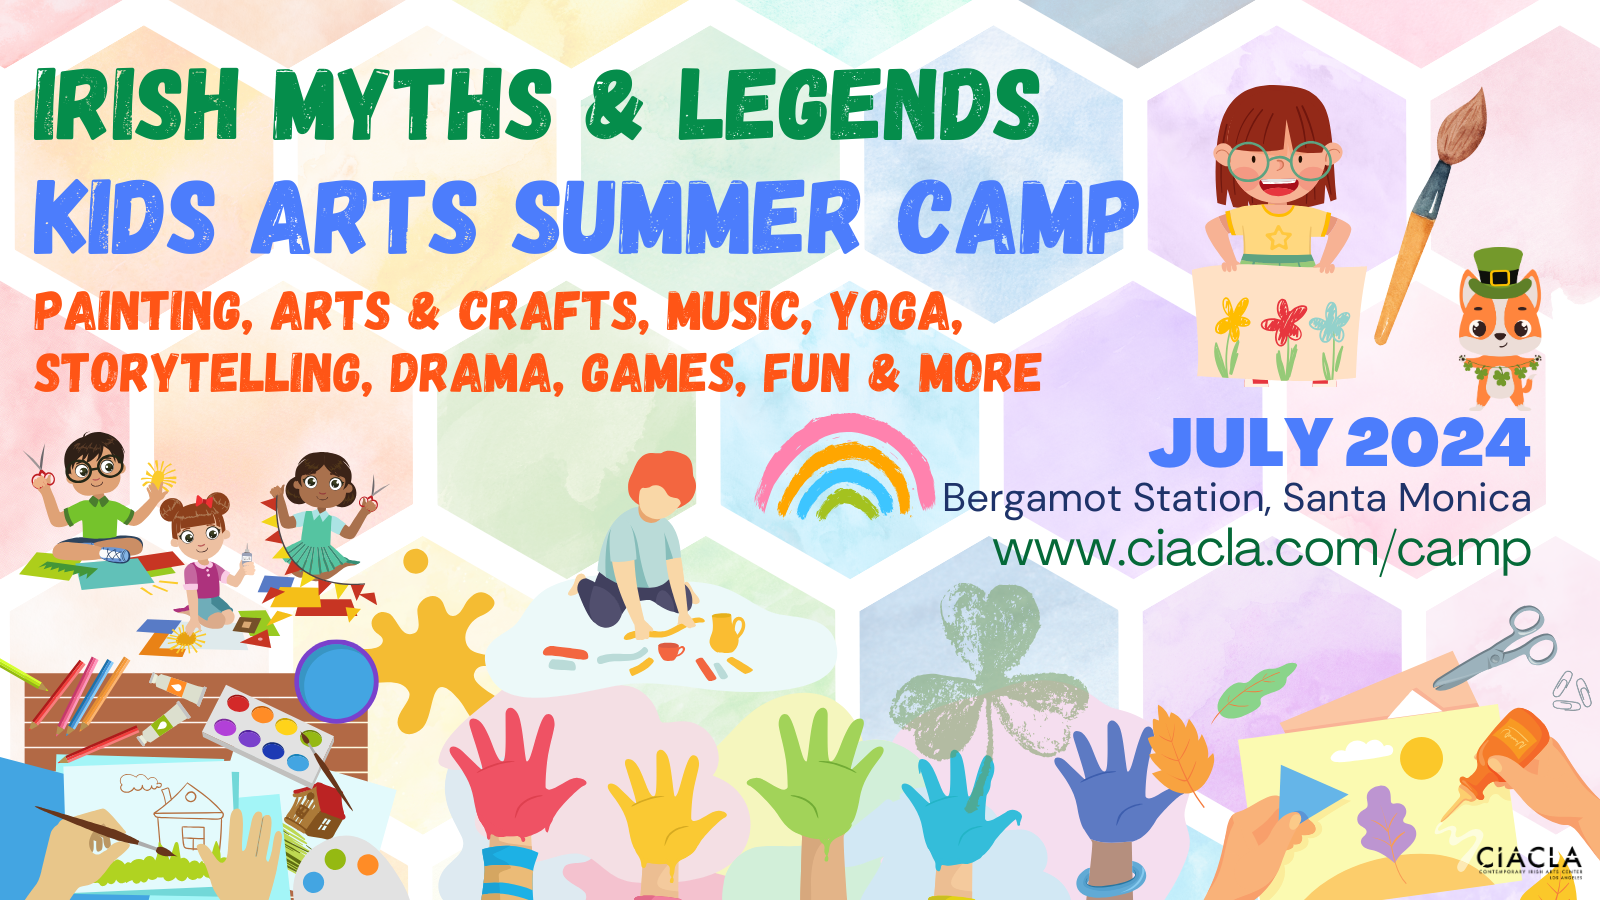 CIACLA Kids Summer Camp